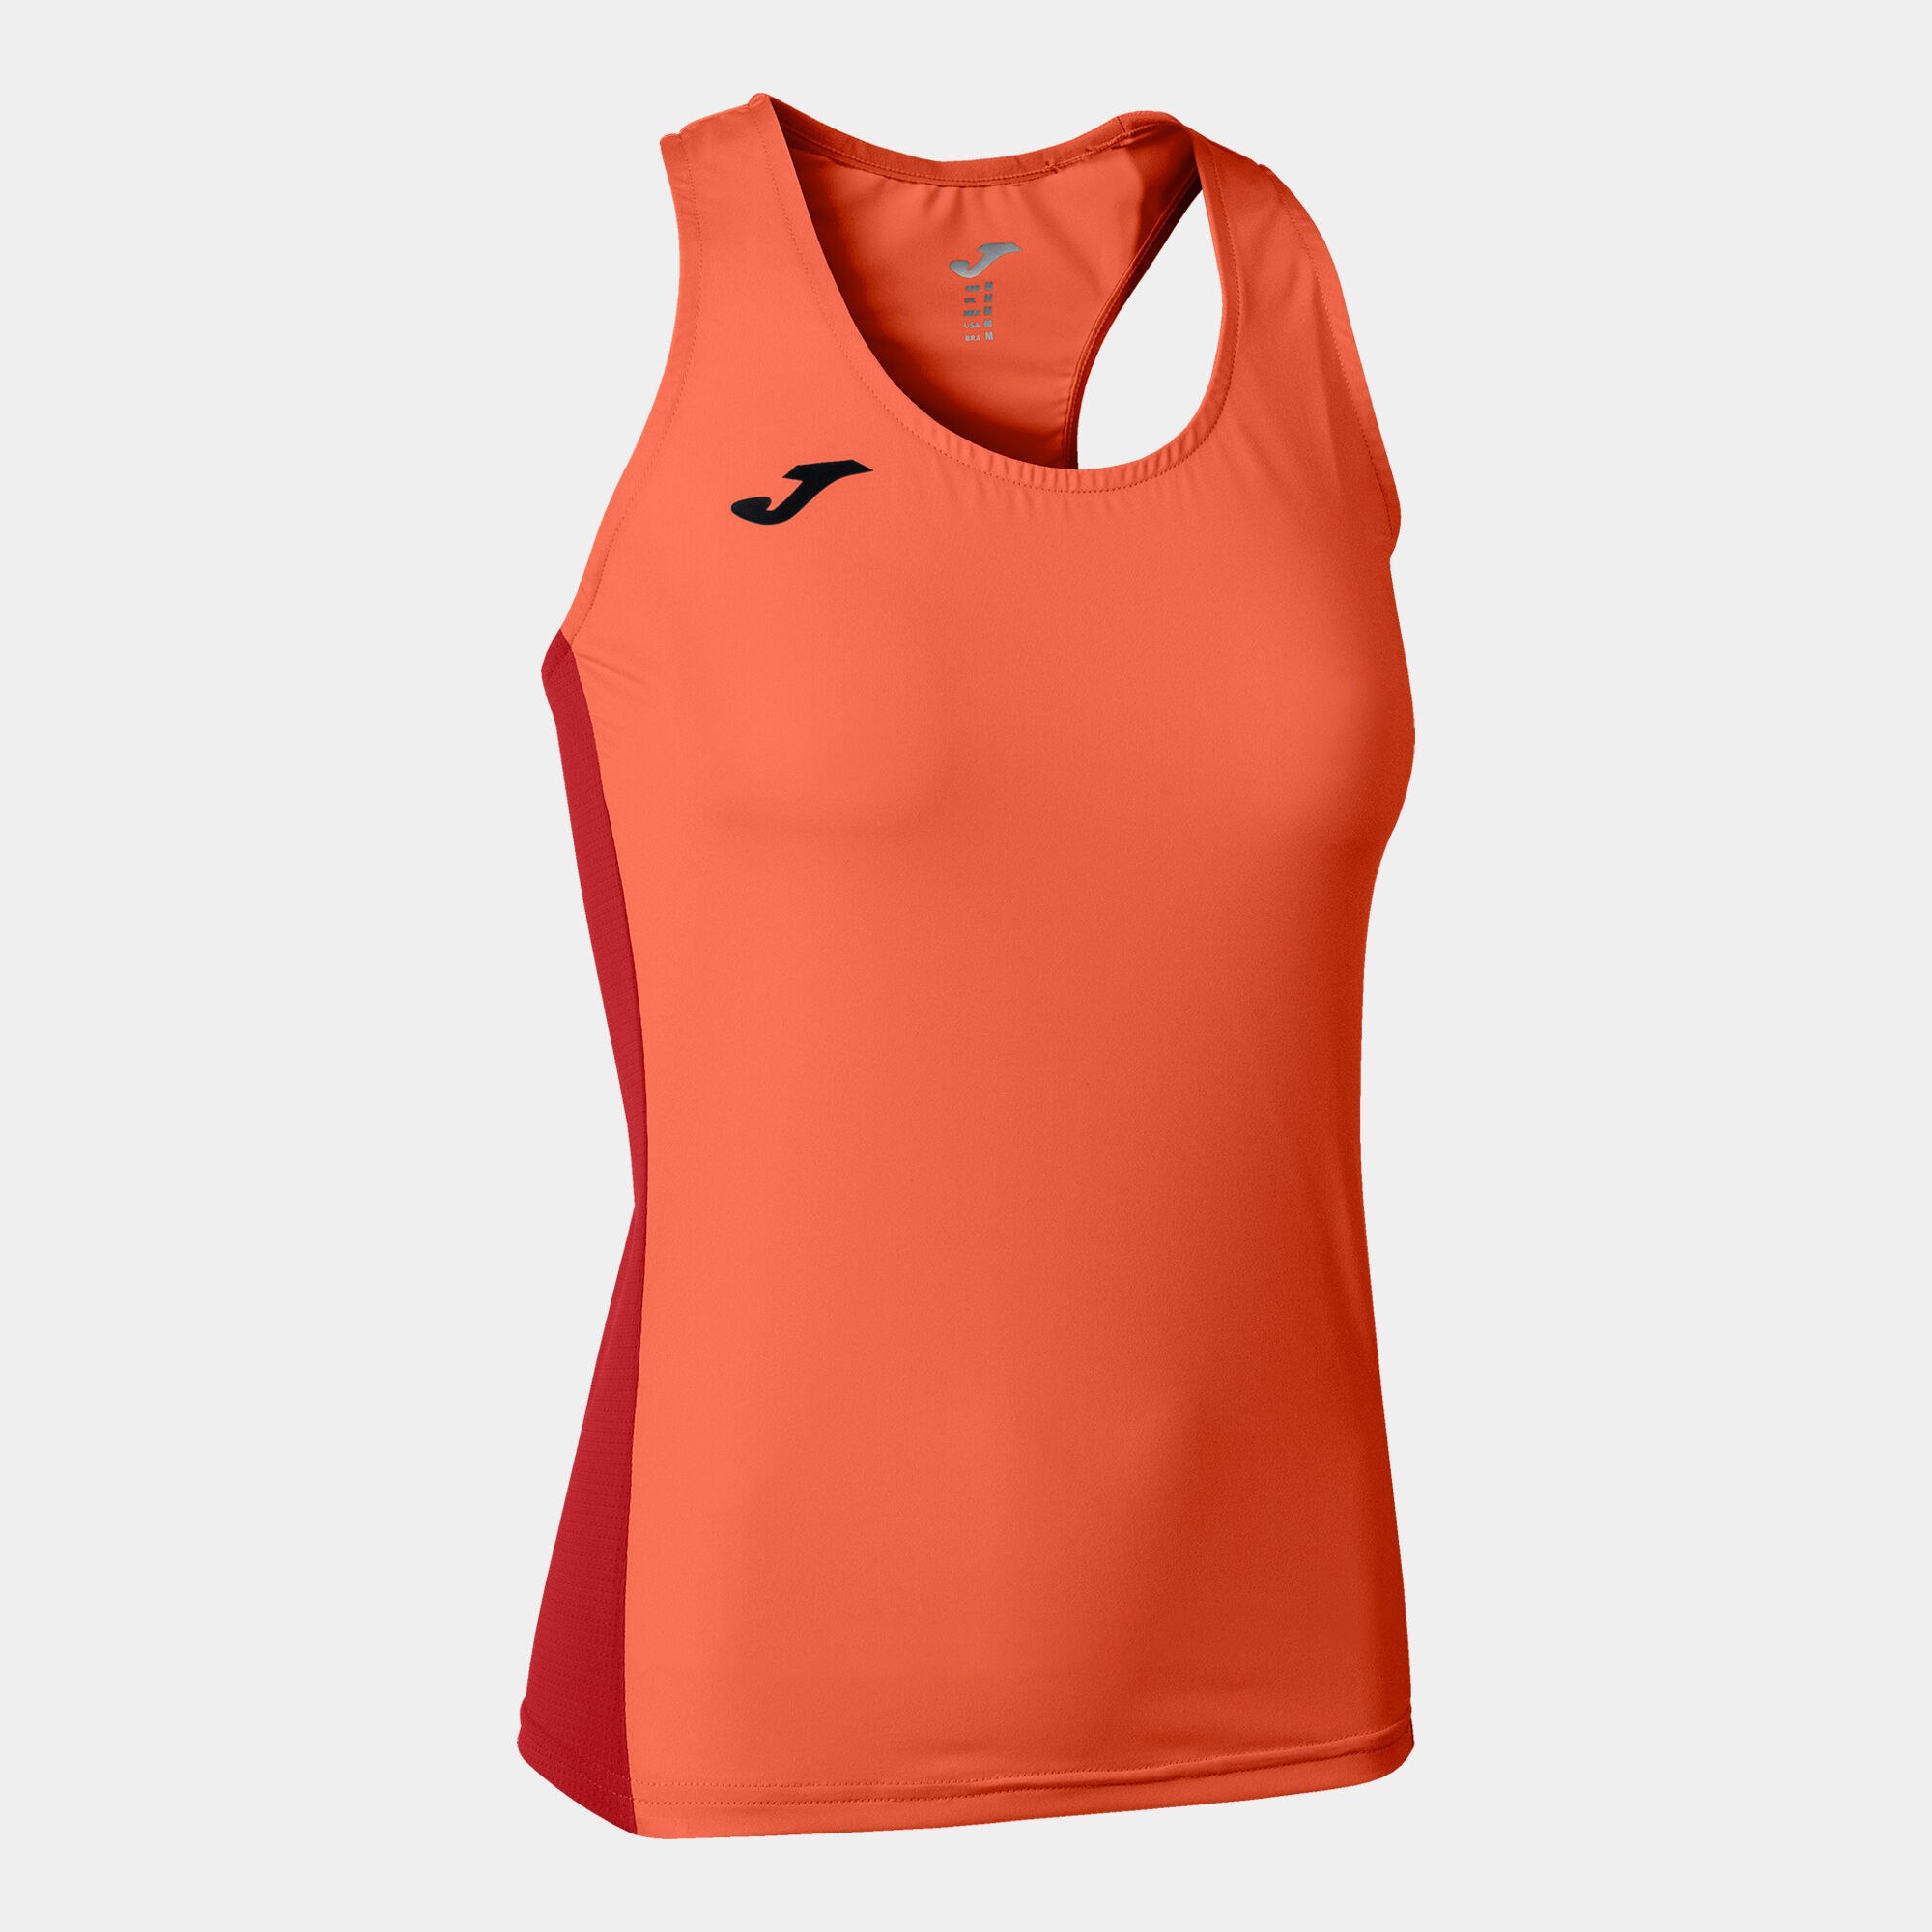 Camiseta tirantes mujer R-Winner naranja flúor